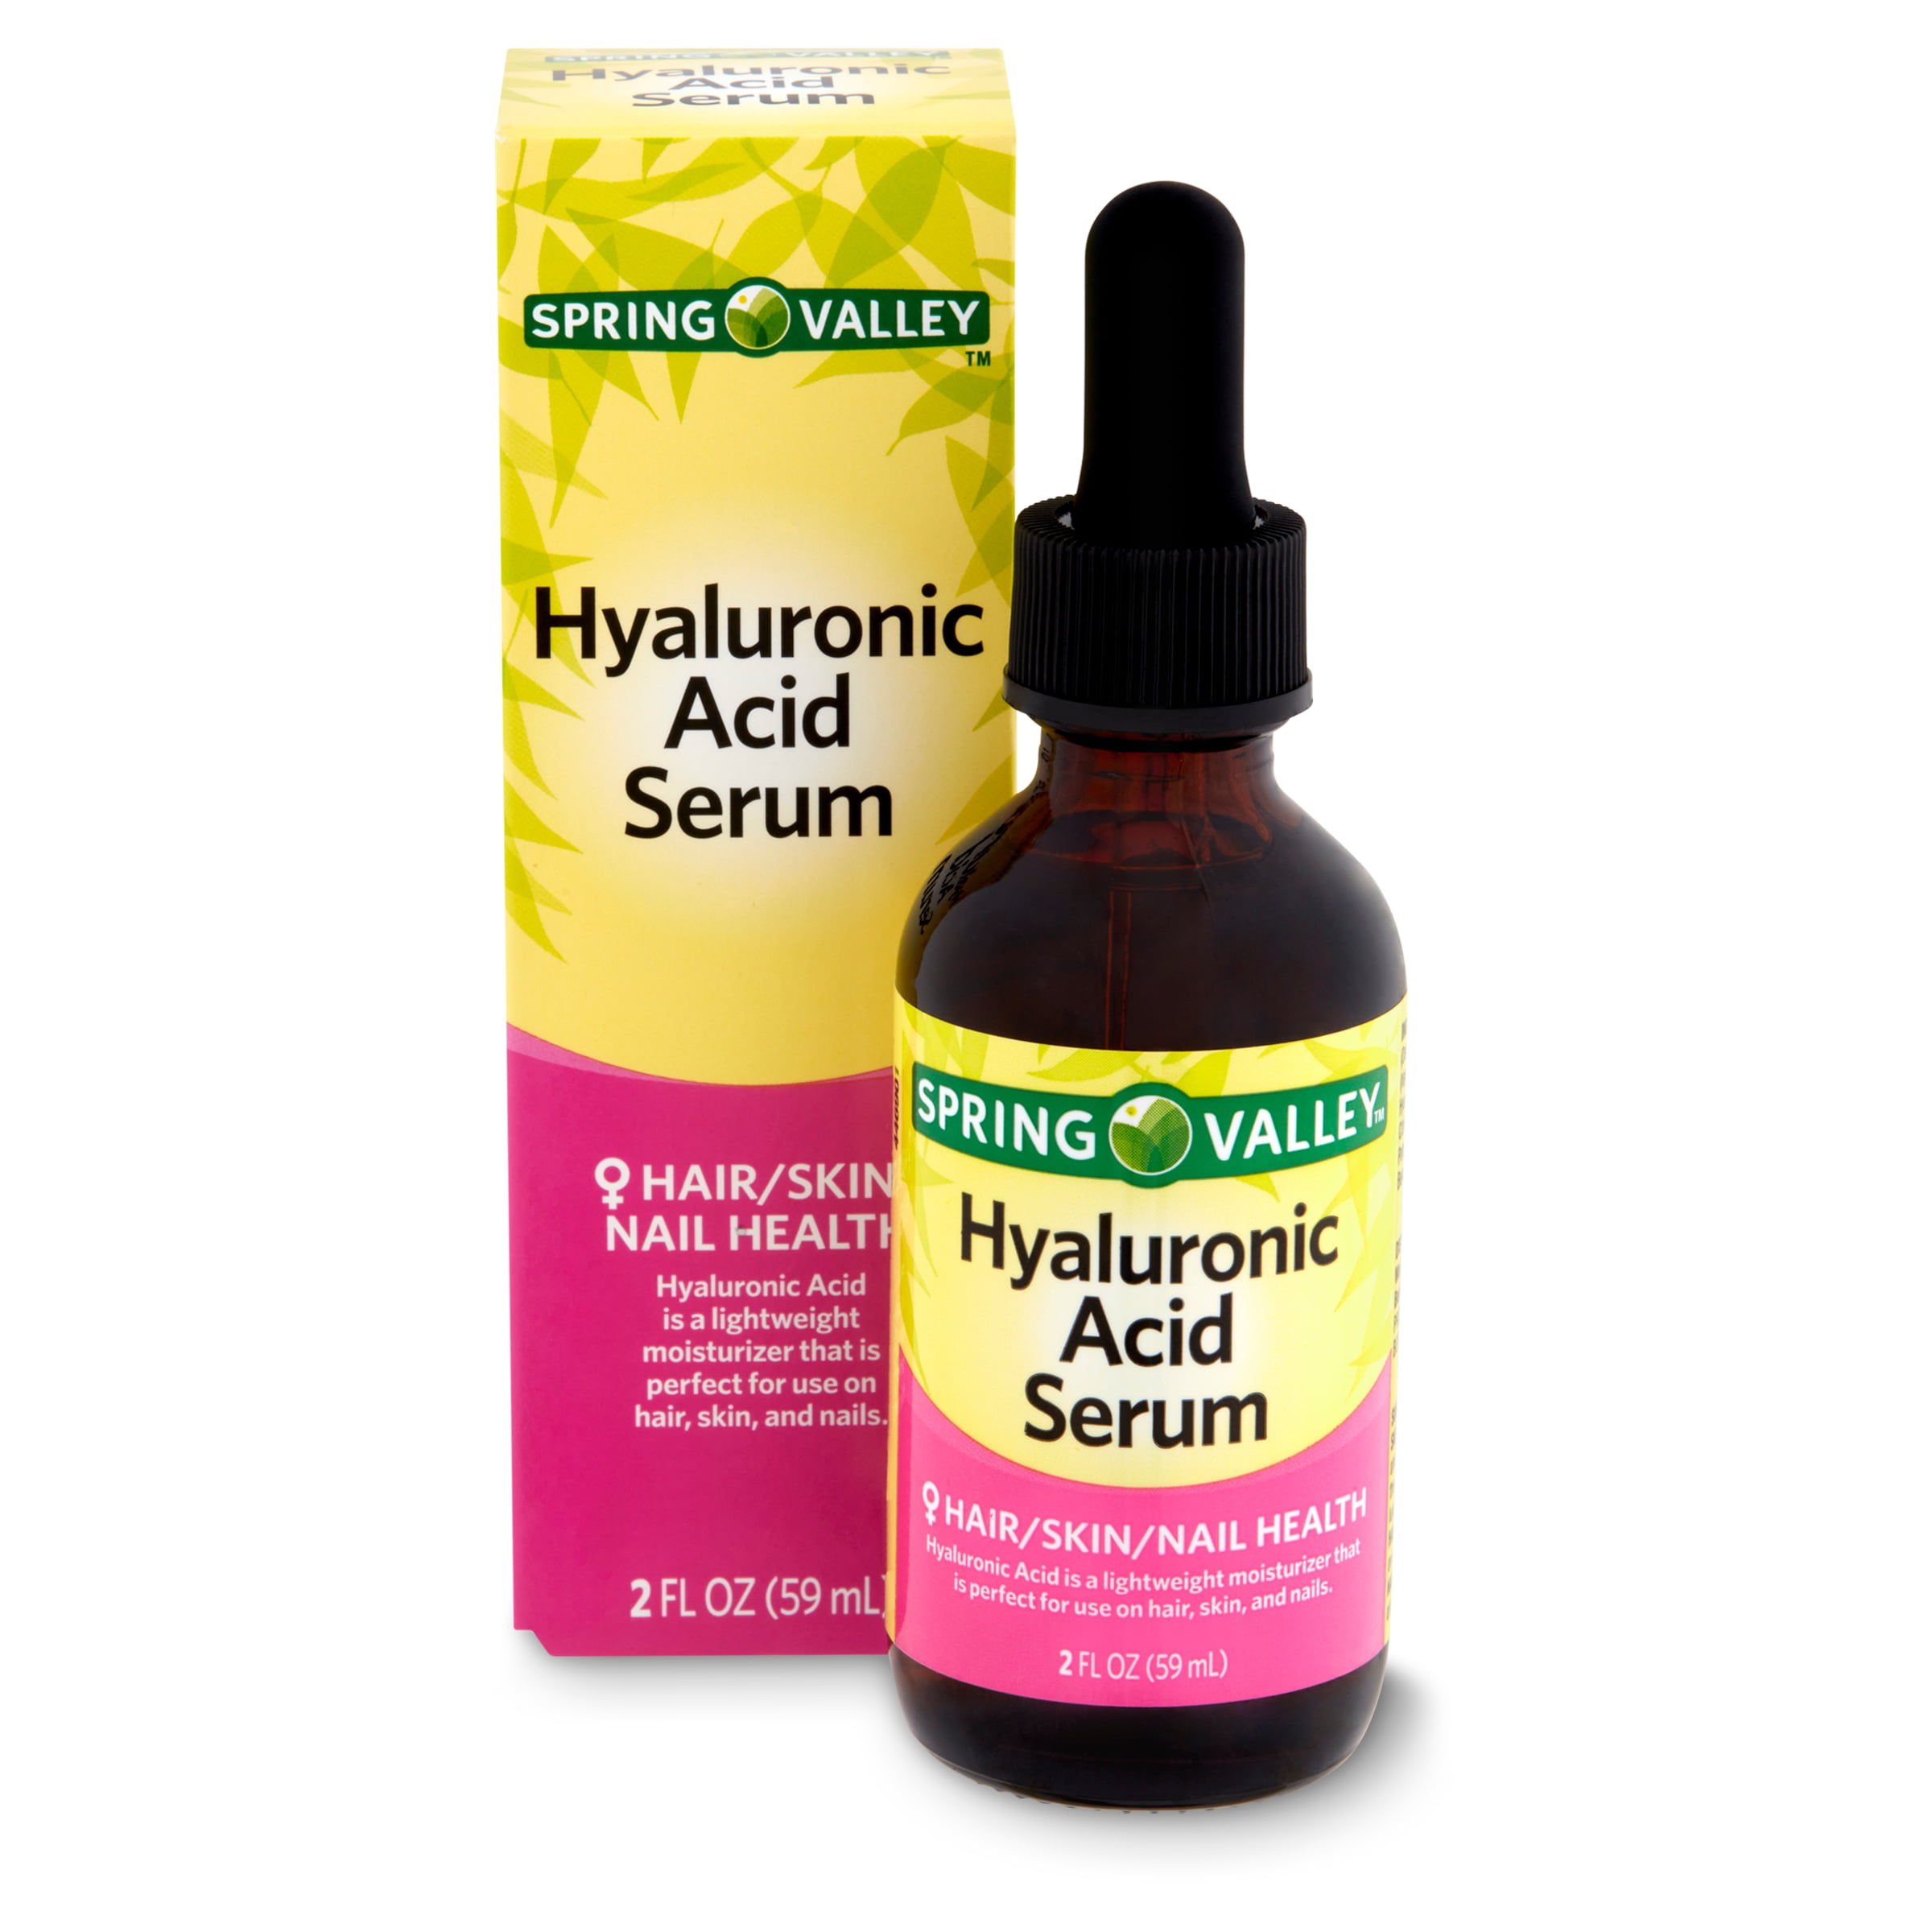 Spring Valley Hyaluronic Acid Serum, 2 fl oz 